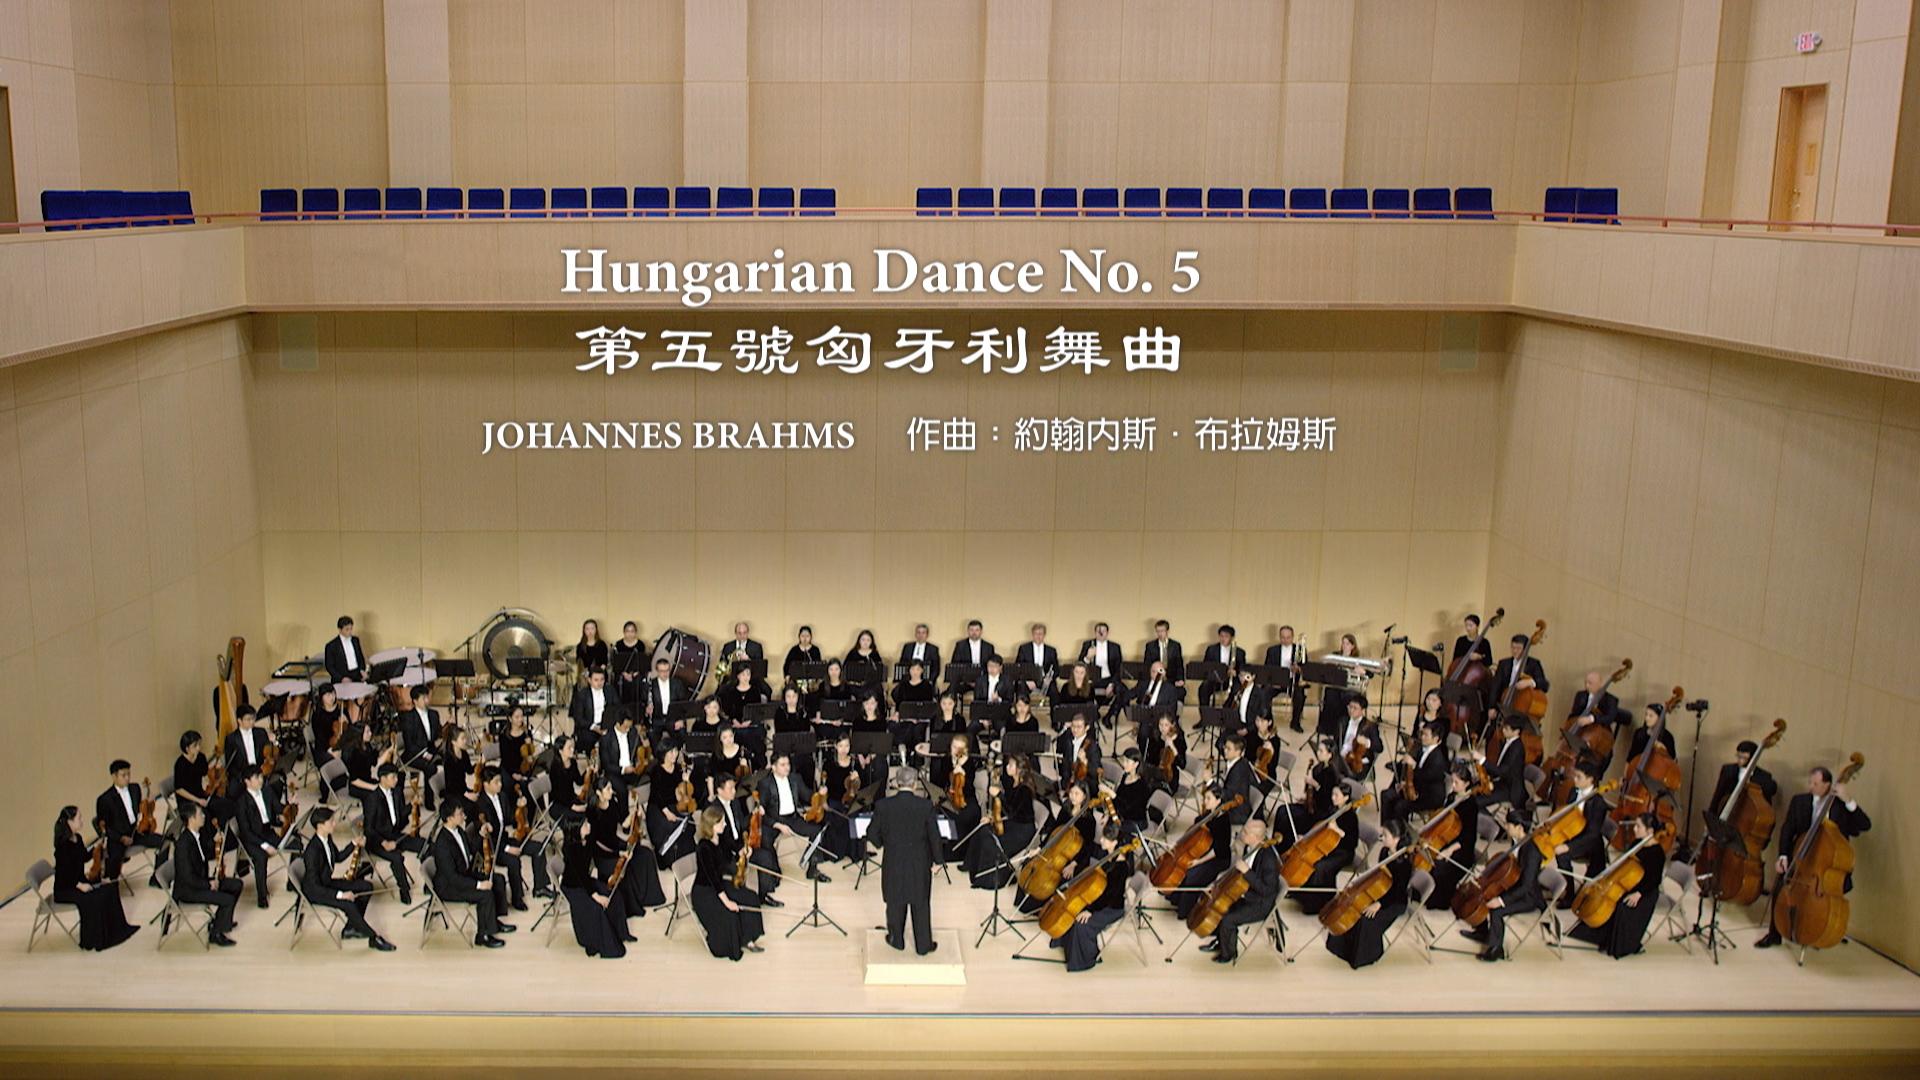 Brahms: Hungarian Dance No. 5 - 2016 Shen Yun Symphony Orchestra